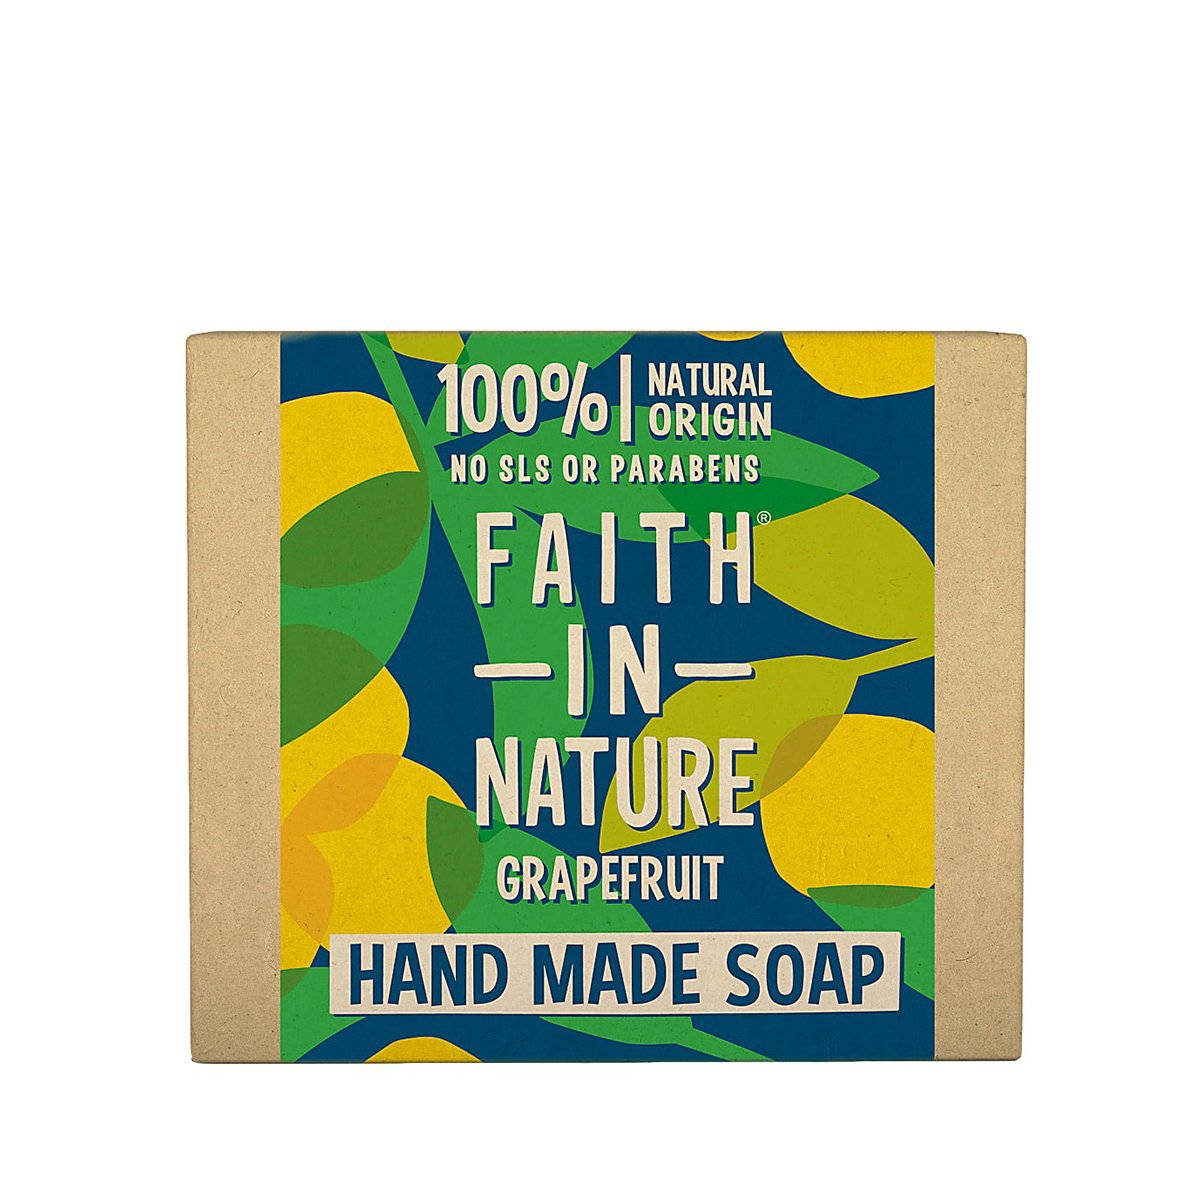 Faith in Nature Grapefruit Soap 100g